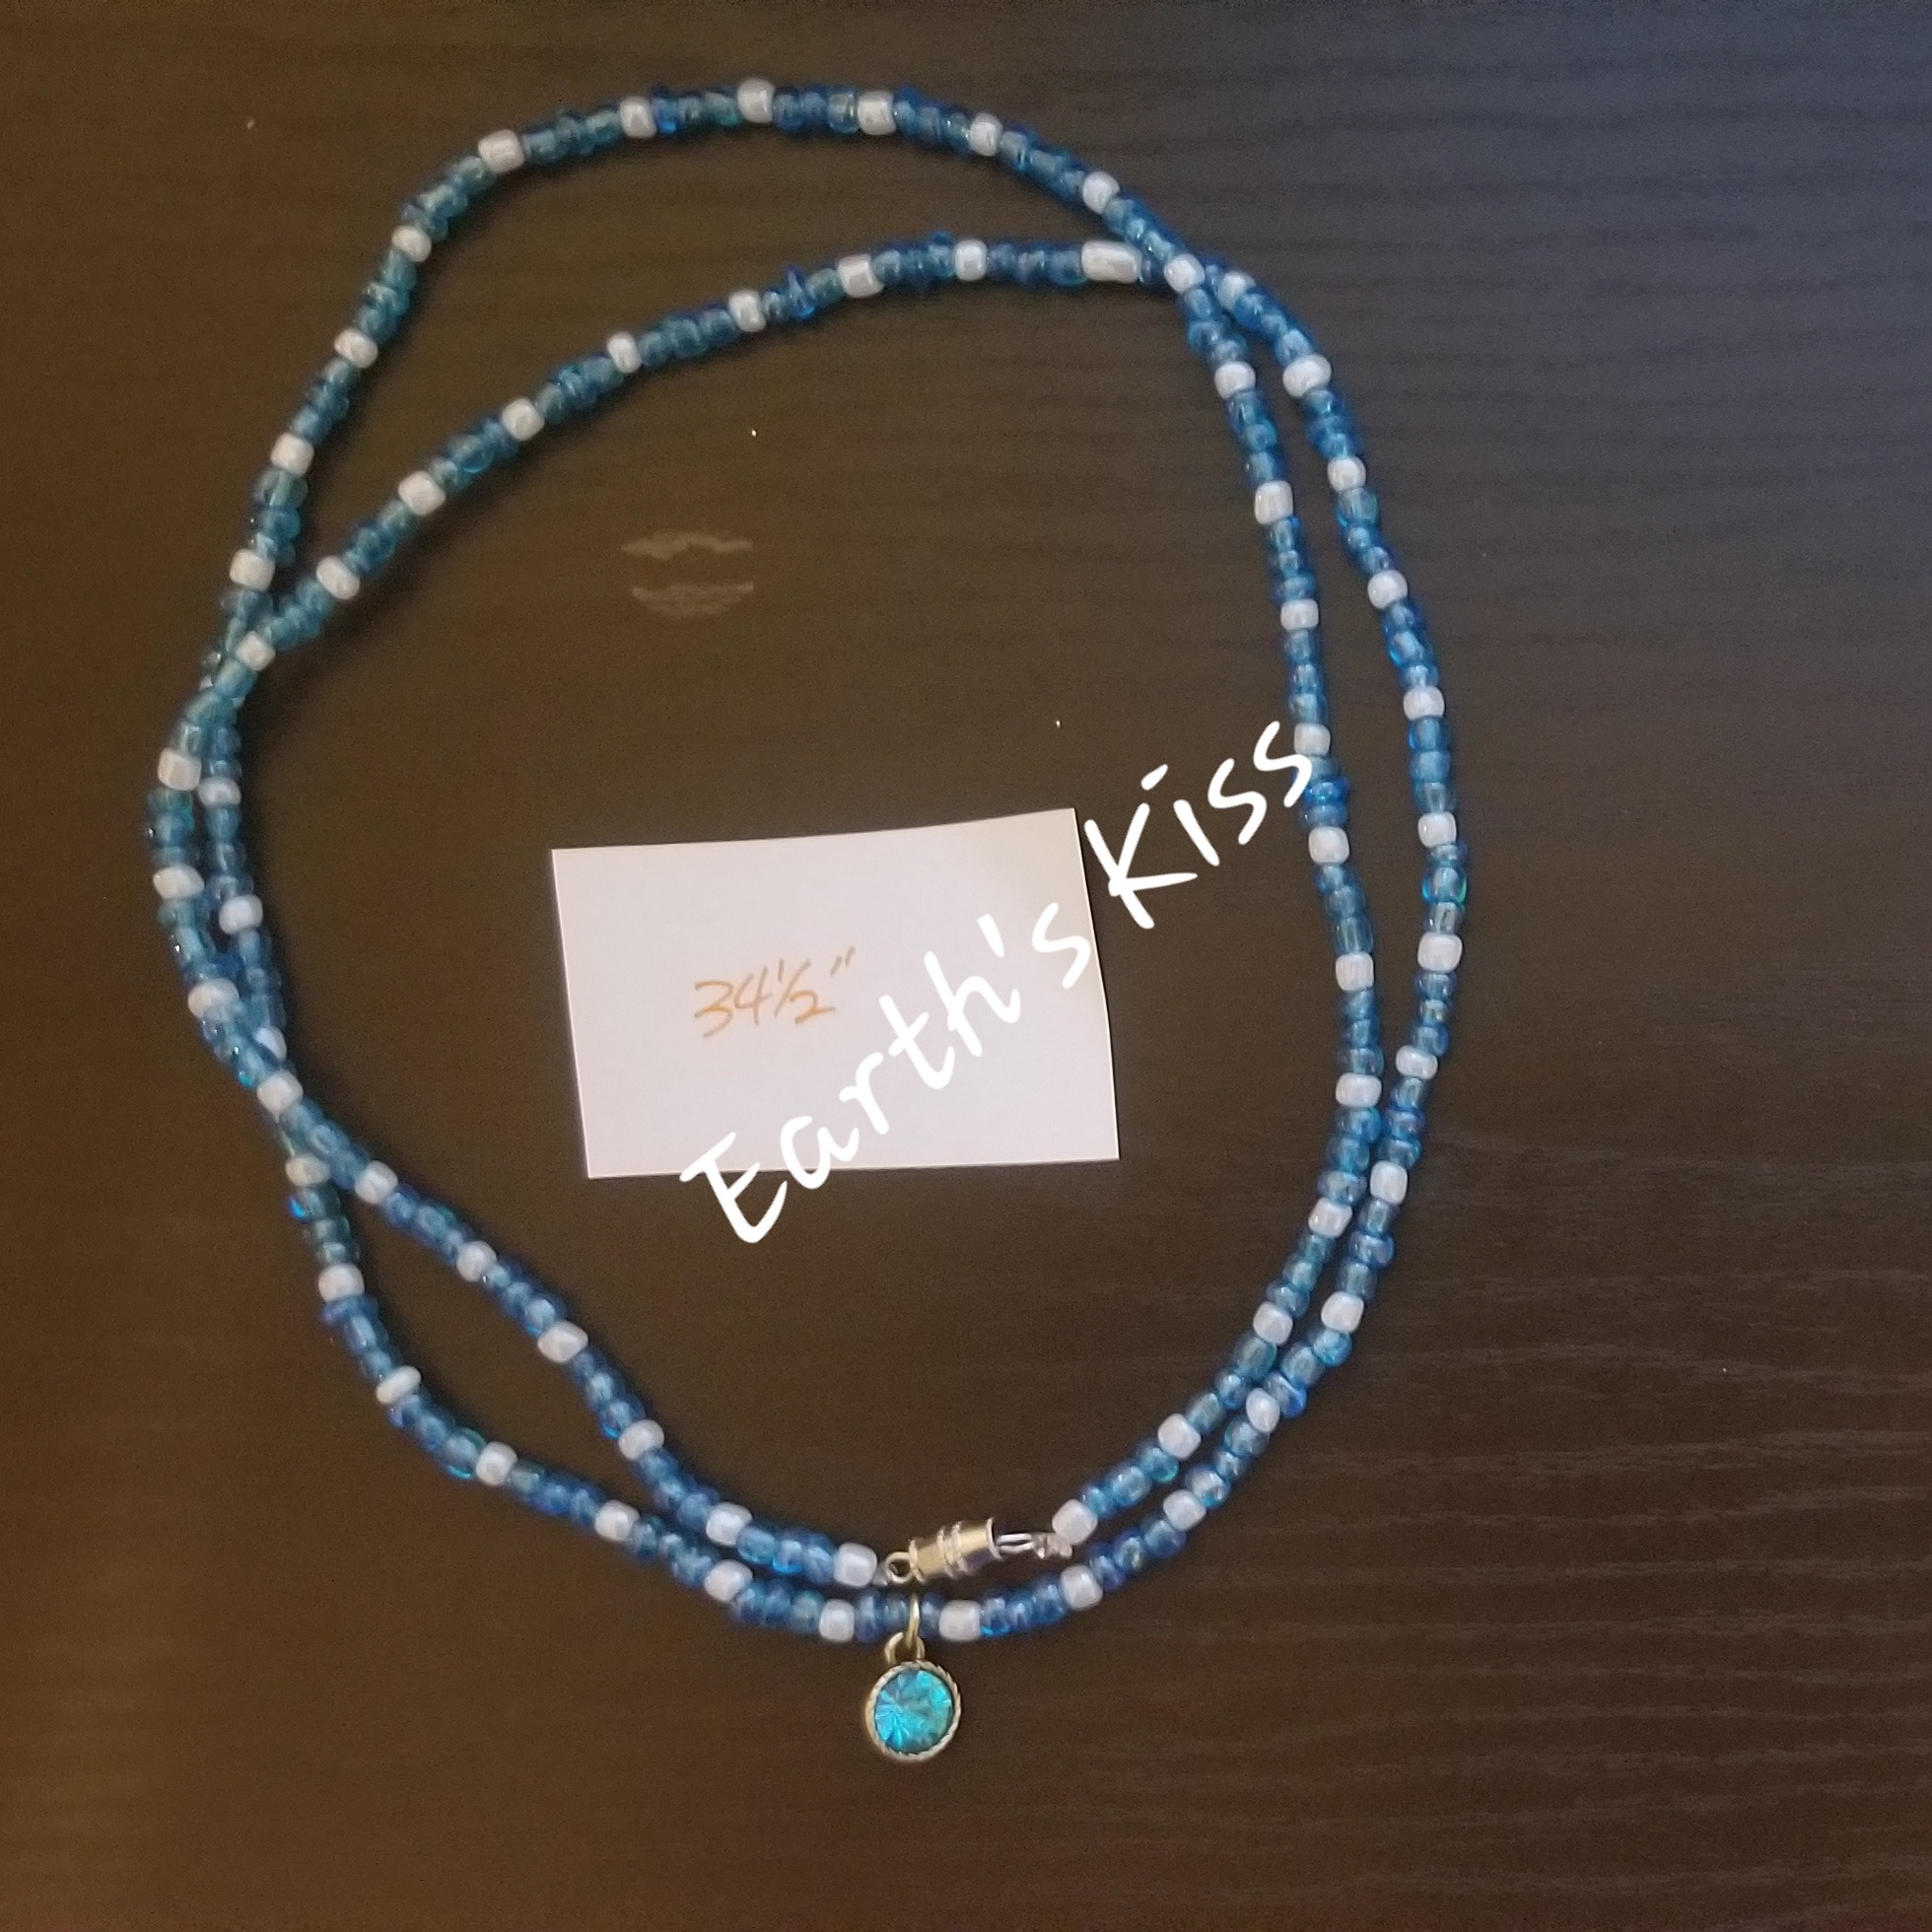 Blue and white waist beads